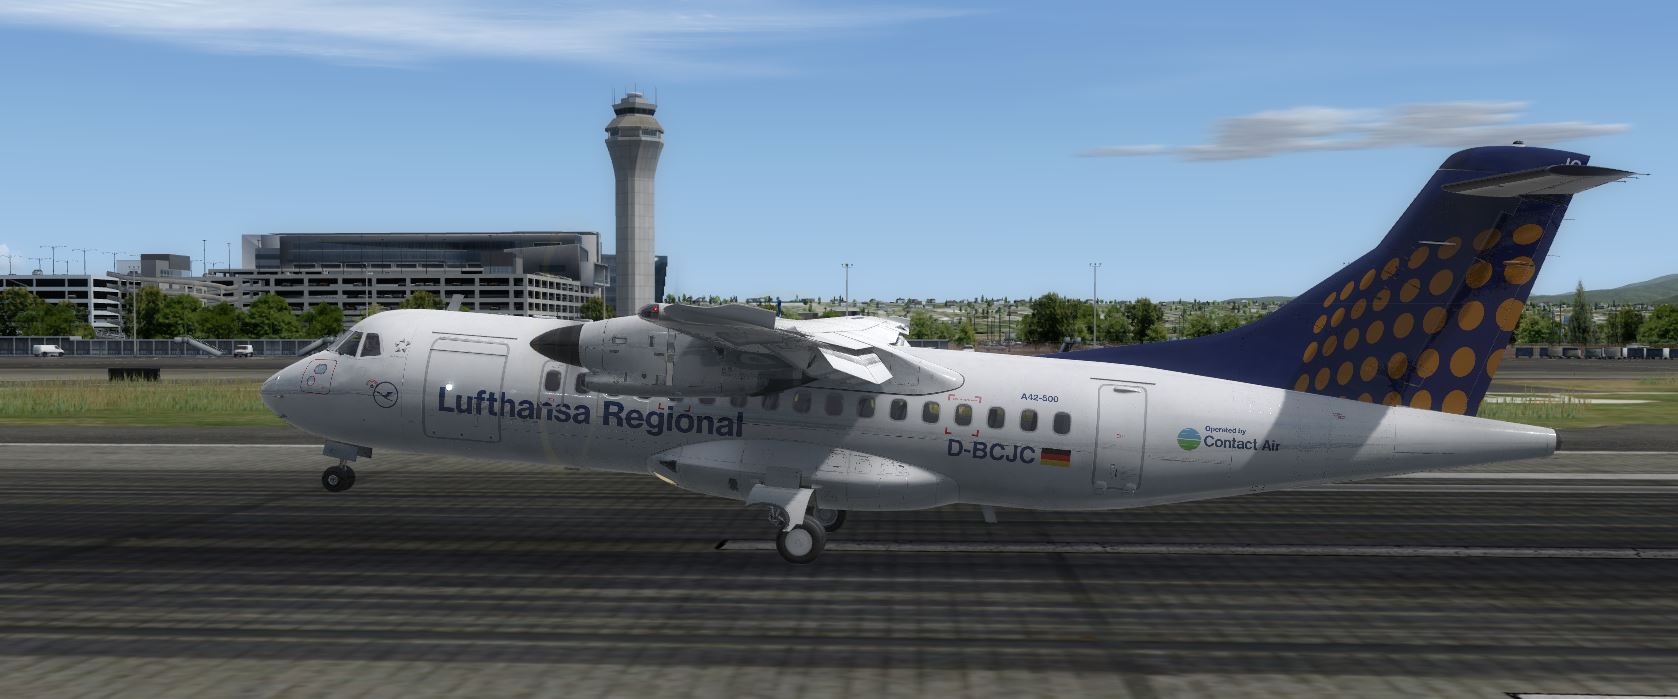 ATR42-500 Lufthansa-5632 